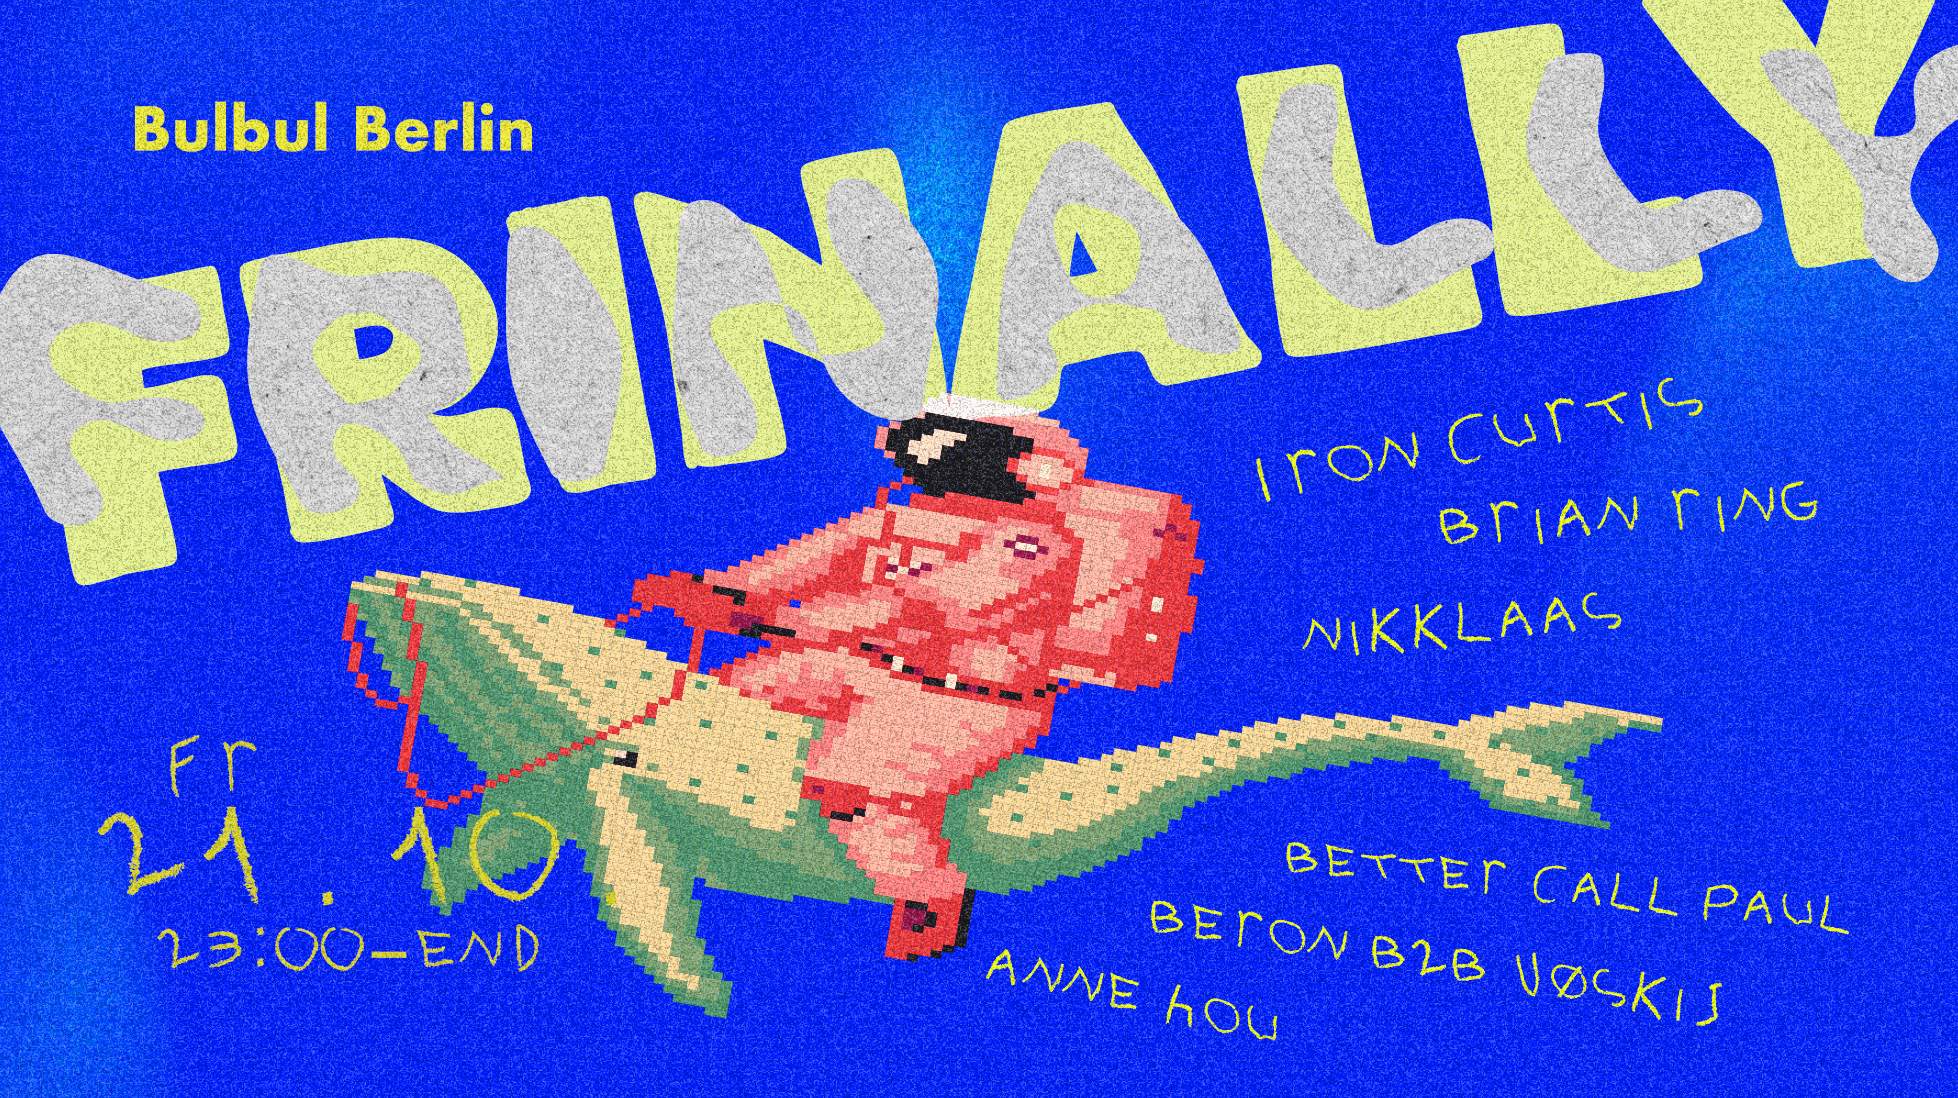 Frinally: Iron Curtis, Brian Ring, Nikklaas, Better Call Paul, Anne Hou, Beron b2b Vøskij - Página frontal